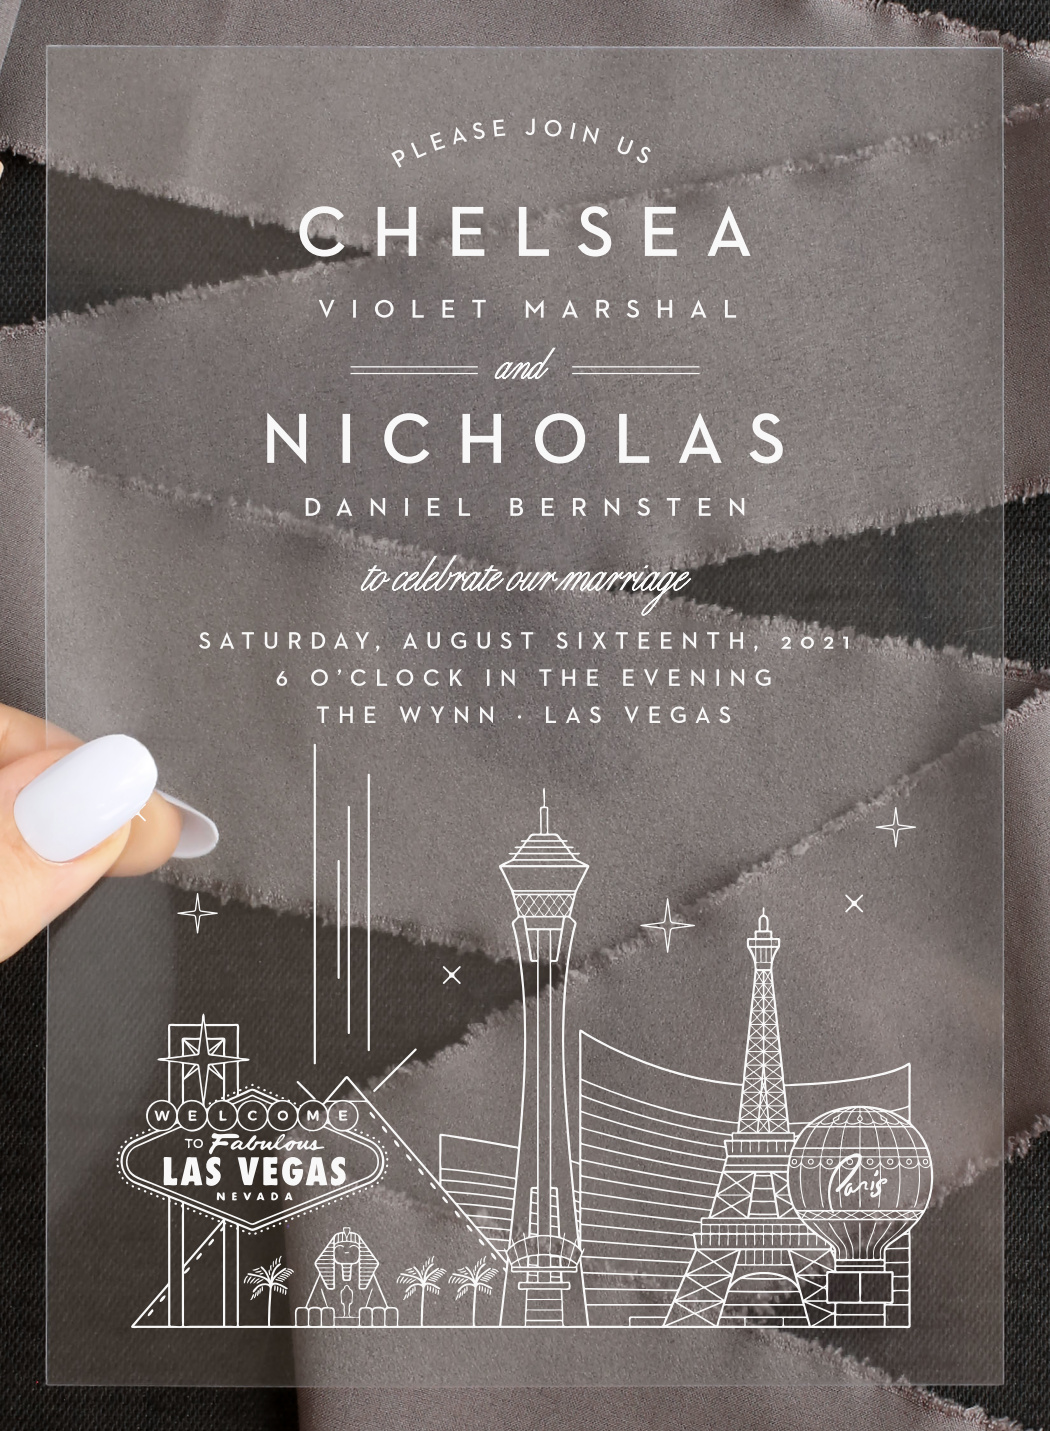 Las Vegas Skyline Save the Date Cards by Basic Invite